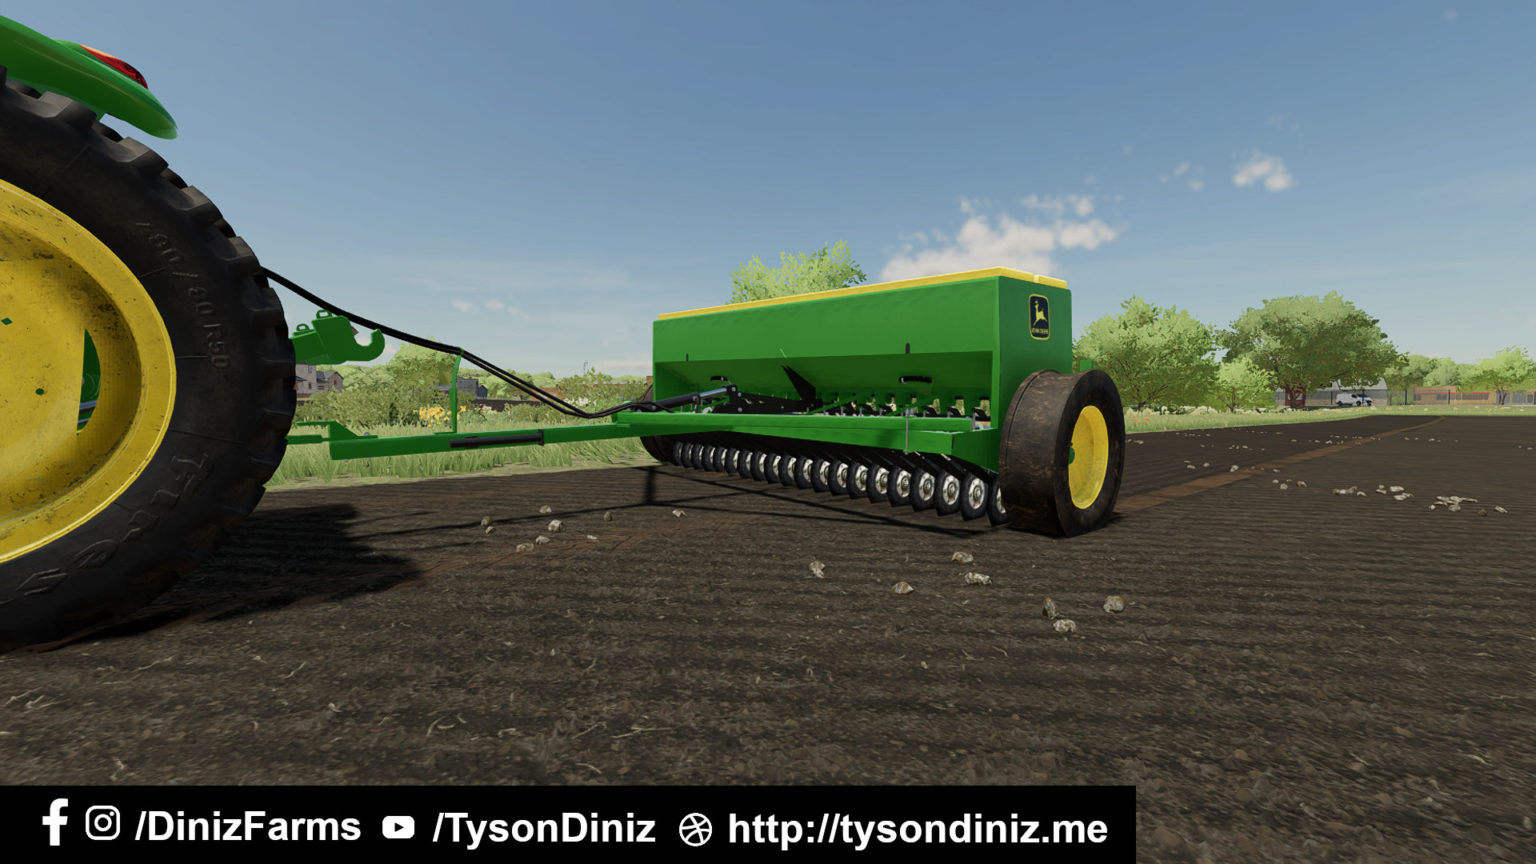 Fs22 Implements Diniz Farms Farming Simulator Modding 5655